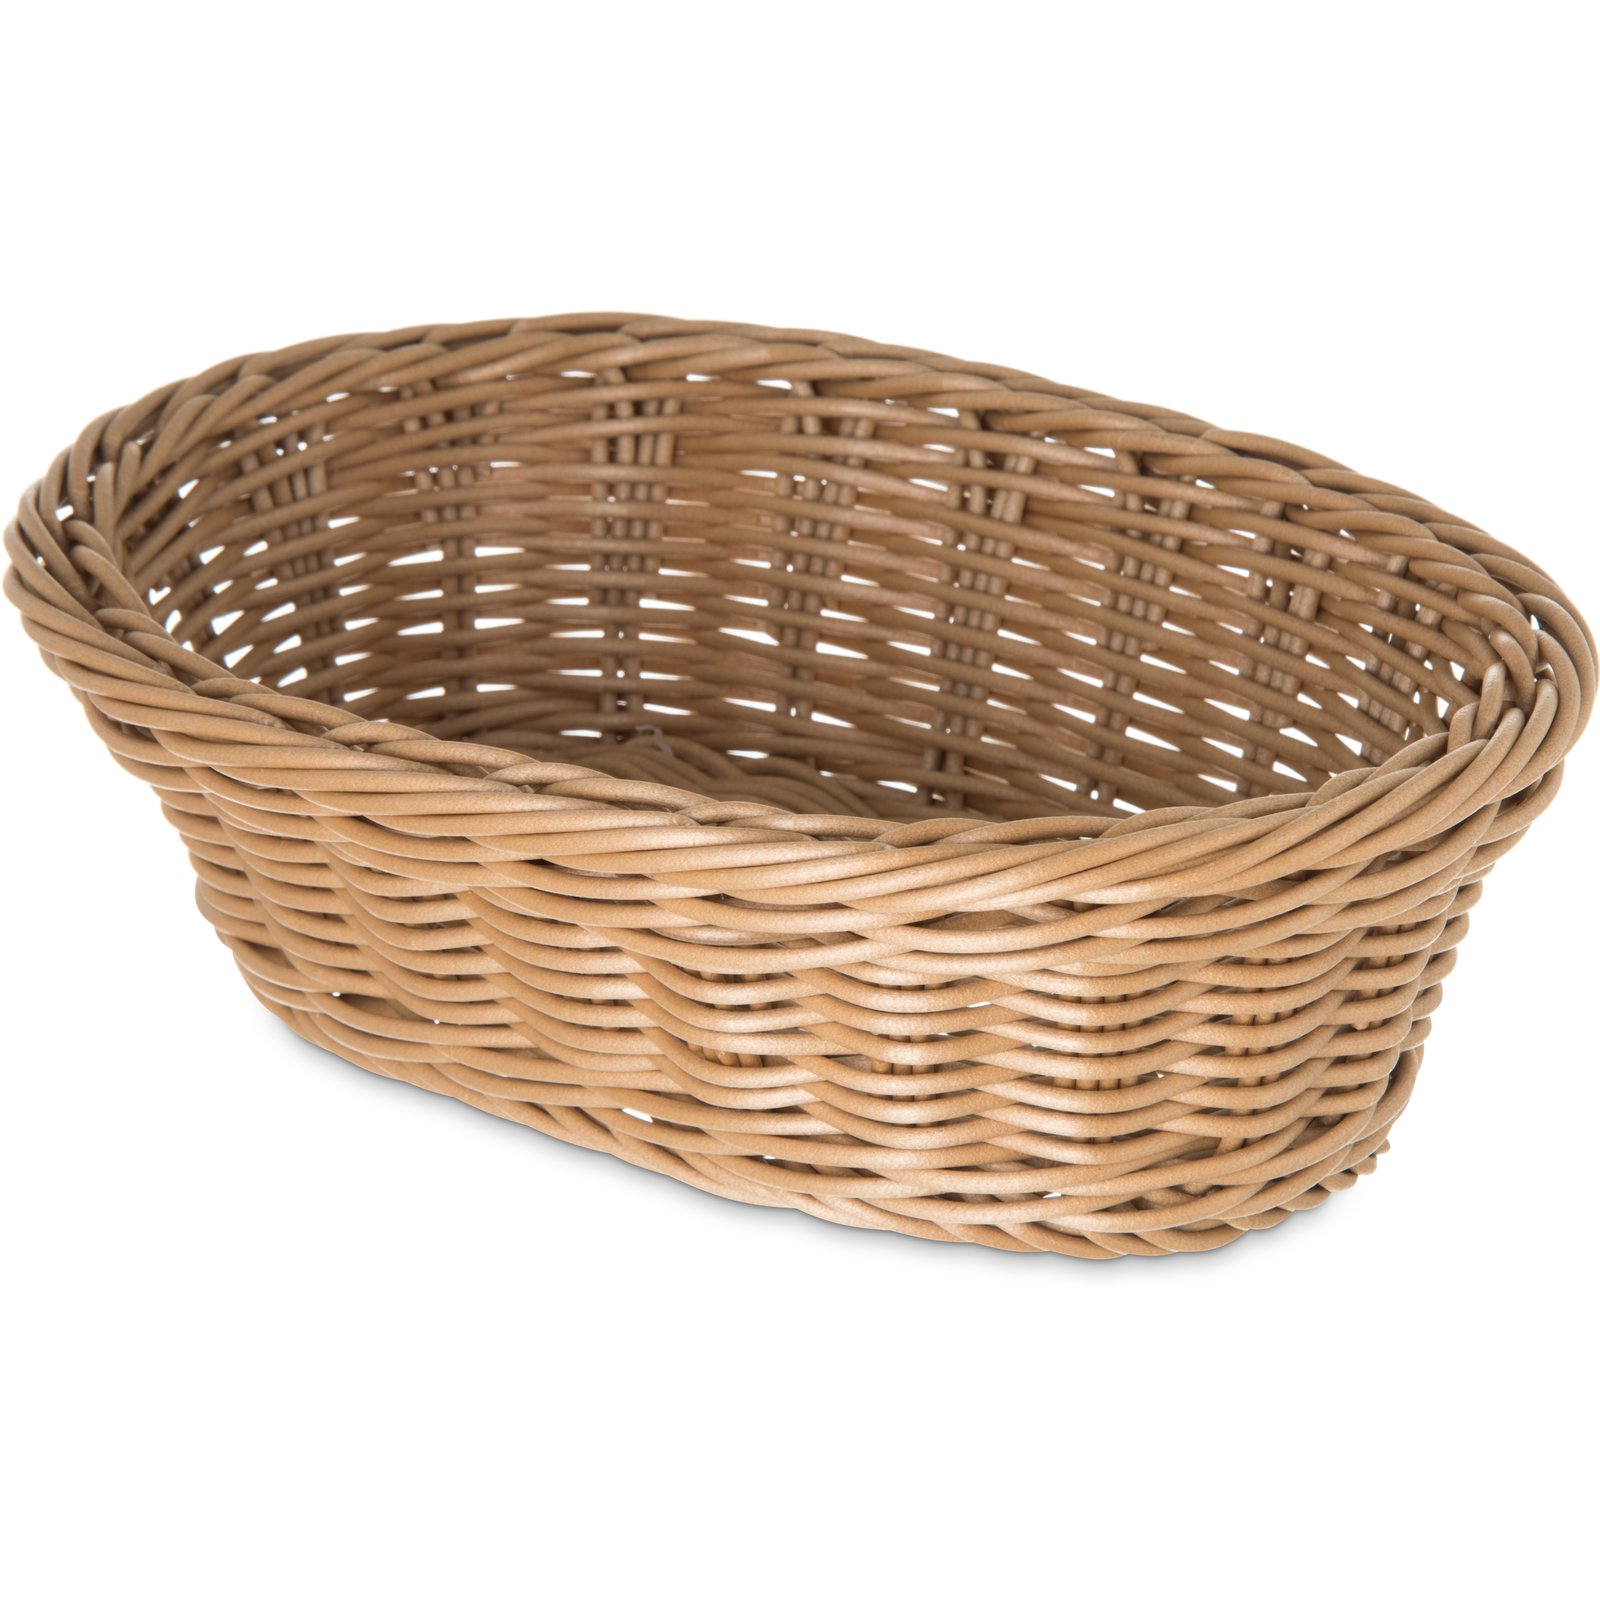 655025 - Woven Baskets Oval Basket Small 9" - Caramel ...
